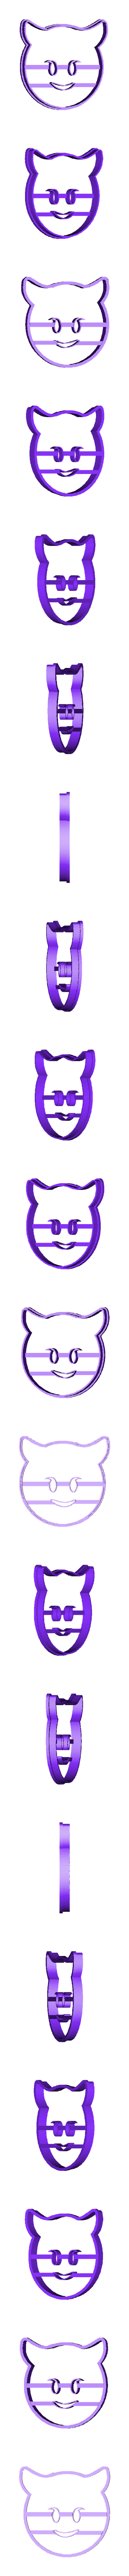 demon face.stl Download STL file Emoji cookie cutter set • 3D printable template, davidruizo